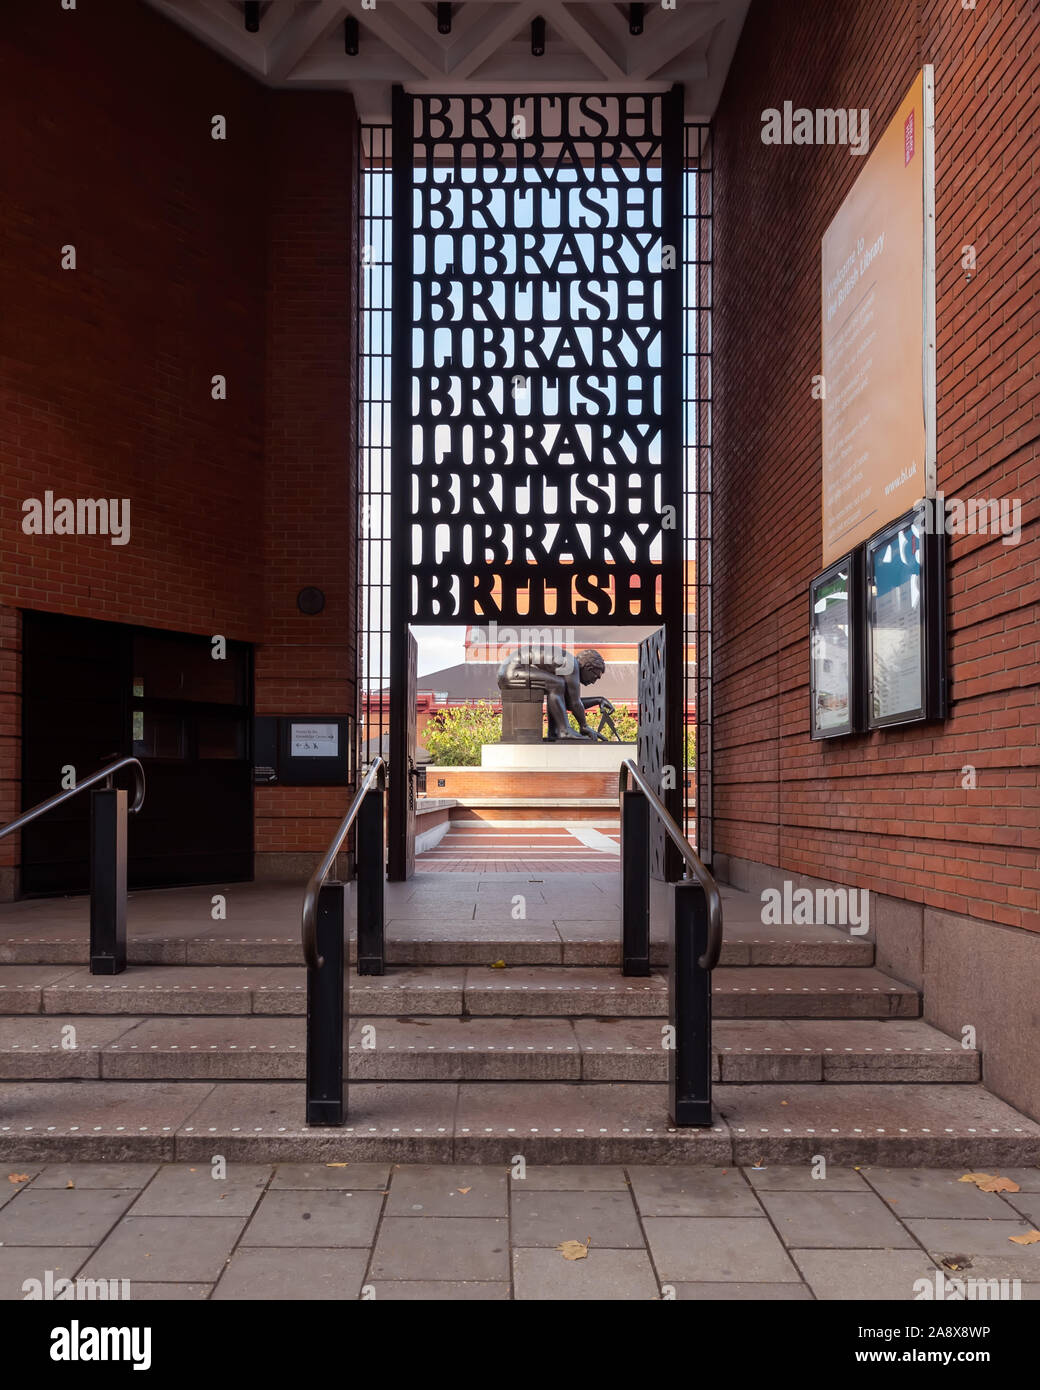 11.09. 2019. Londra, UK, British library entrata. Foto Stock